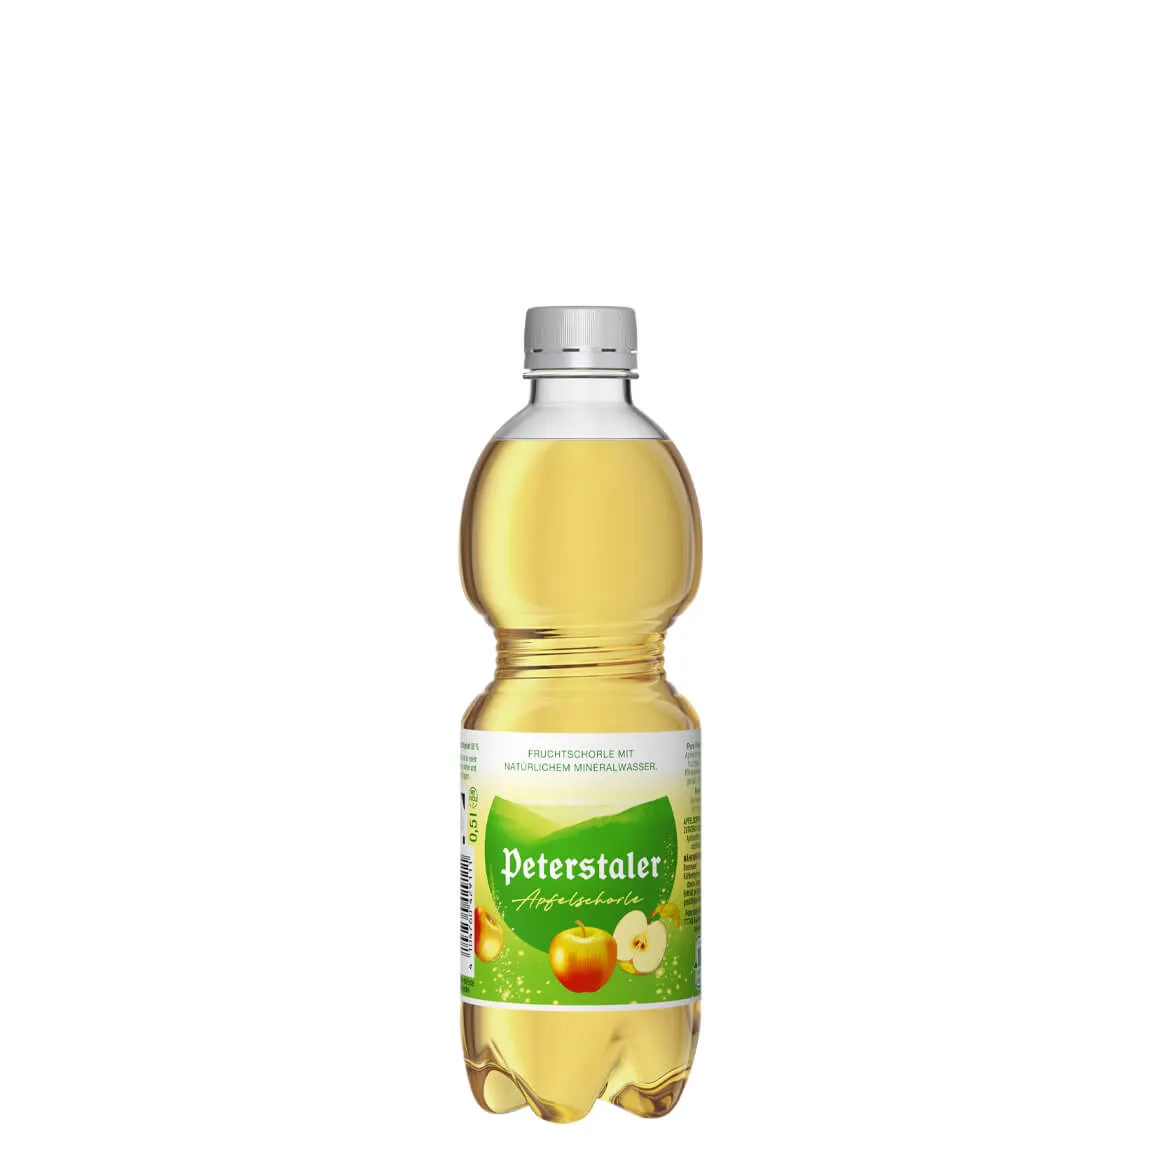 Peterstaler Apfelschorle 0,5 l PET, 20 Flaschen (EINWEG)